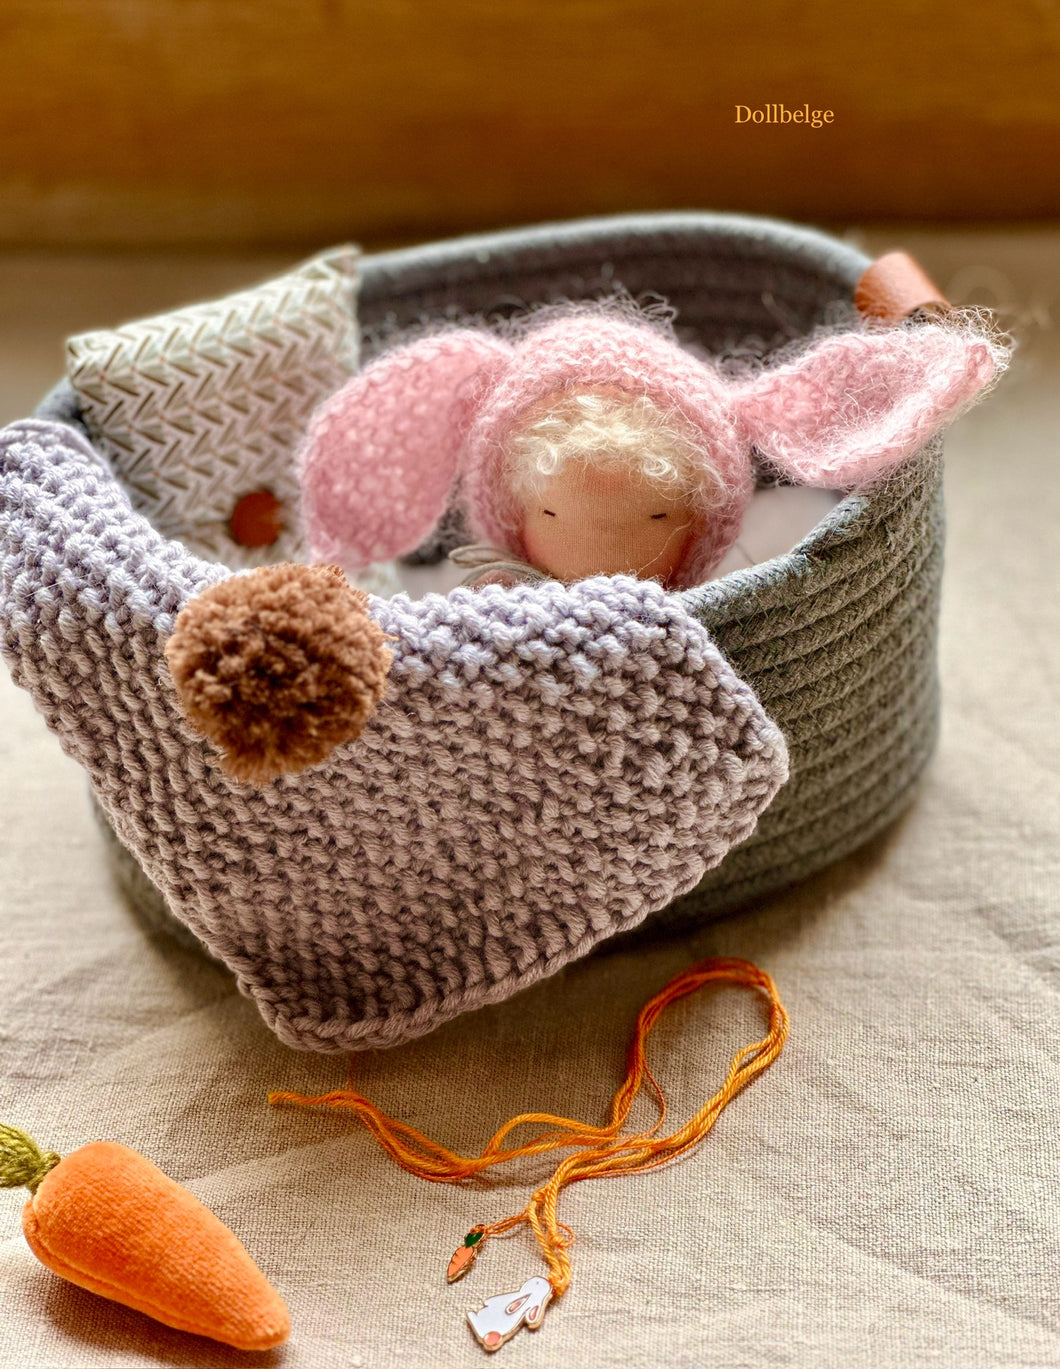 Cuddle Bunny in Basket